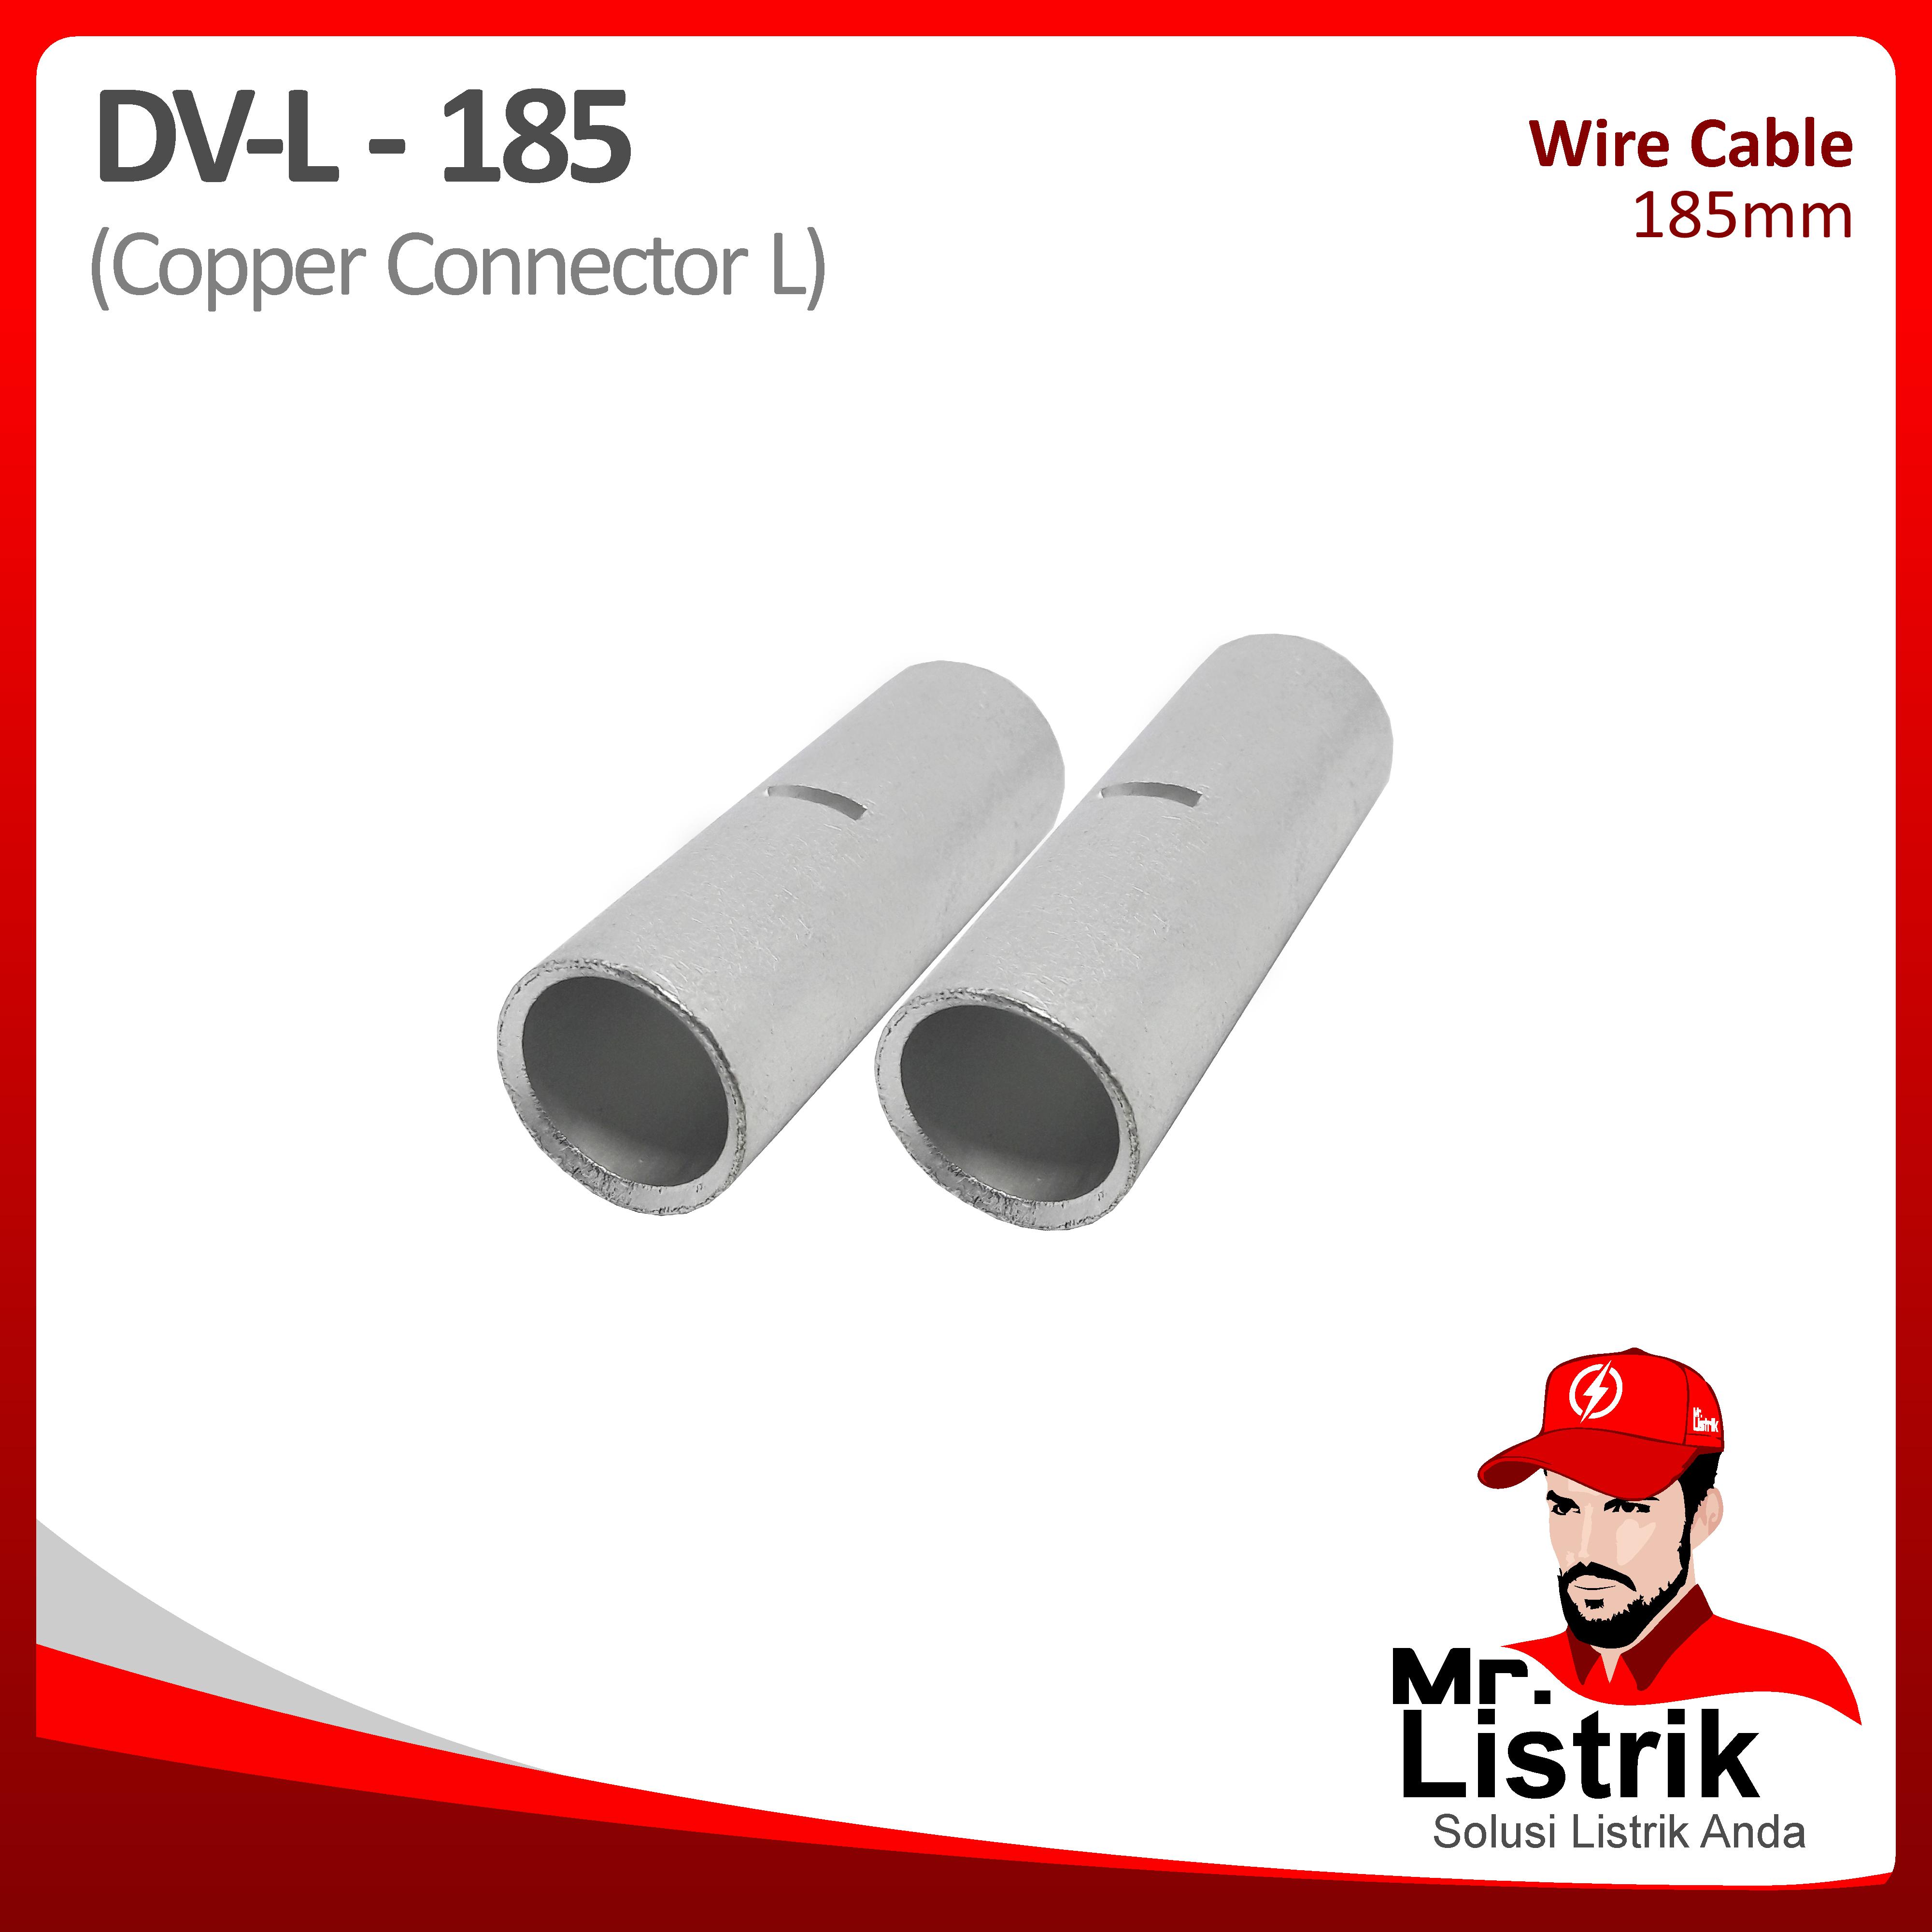 Copper Connector-L 185mm DV L-185